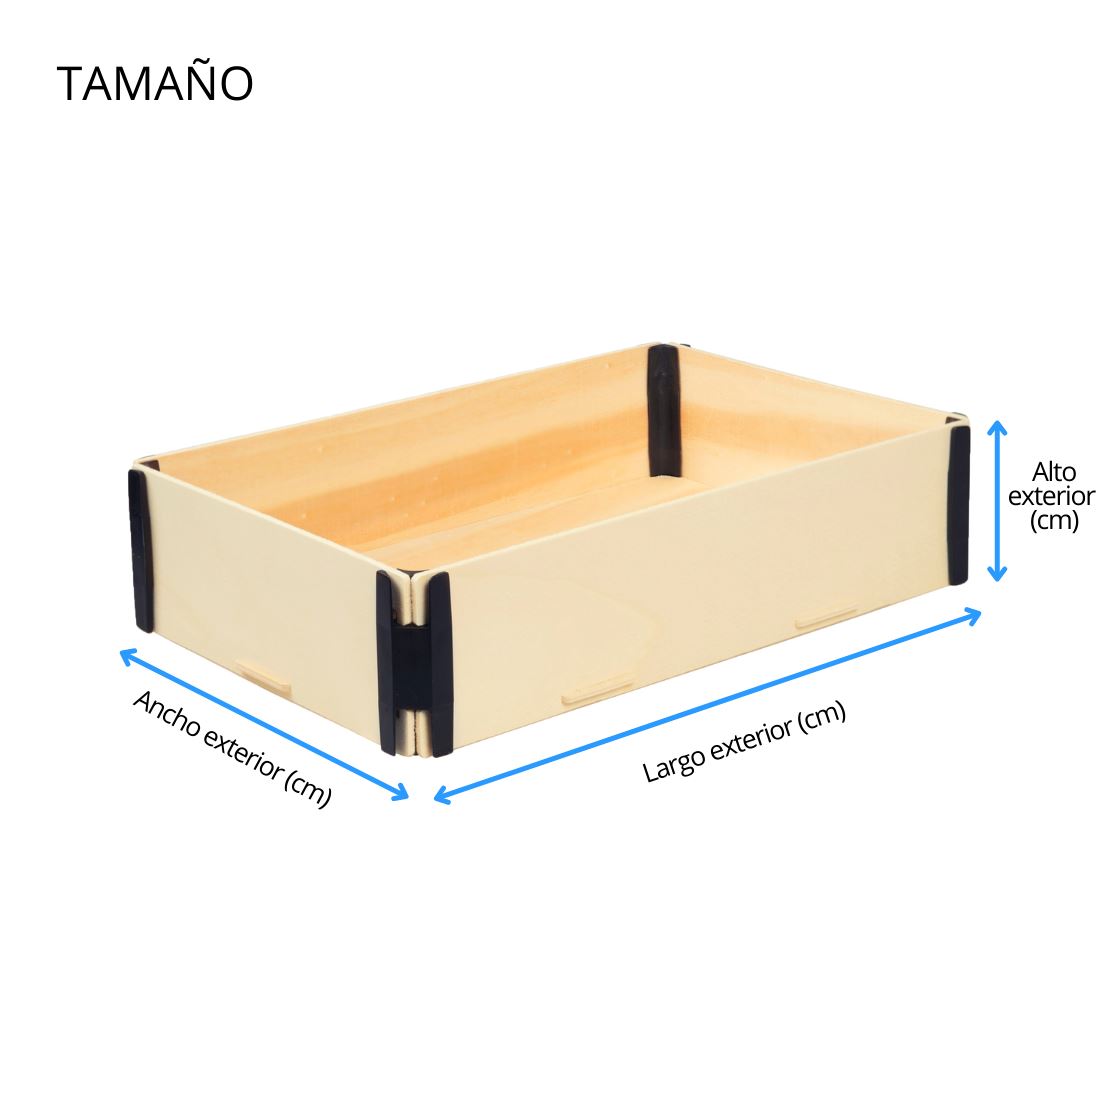 Cajas de madera sin tapa - Astigarraga Kit Line